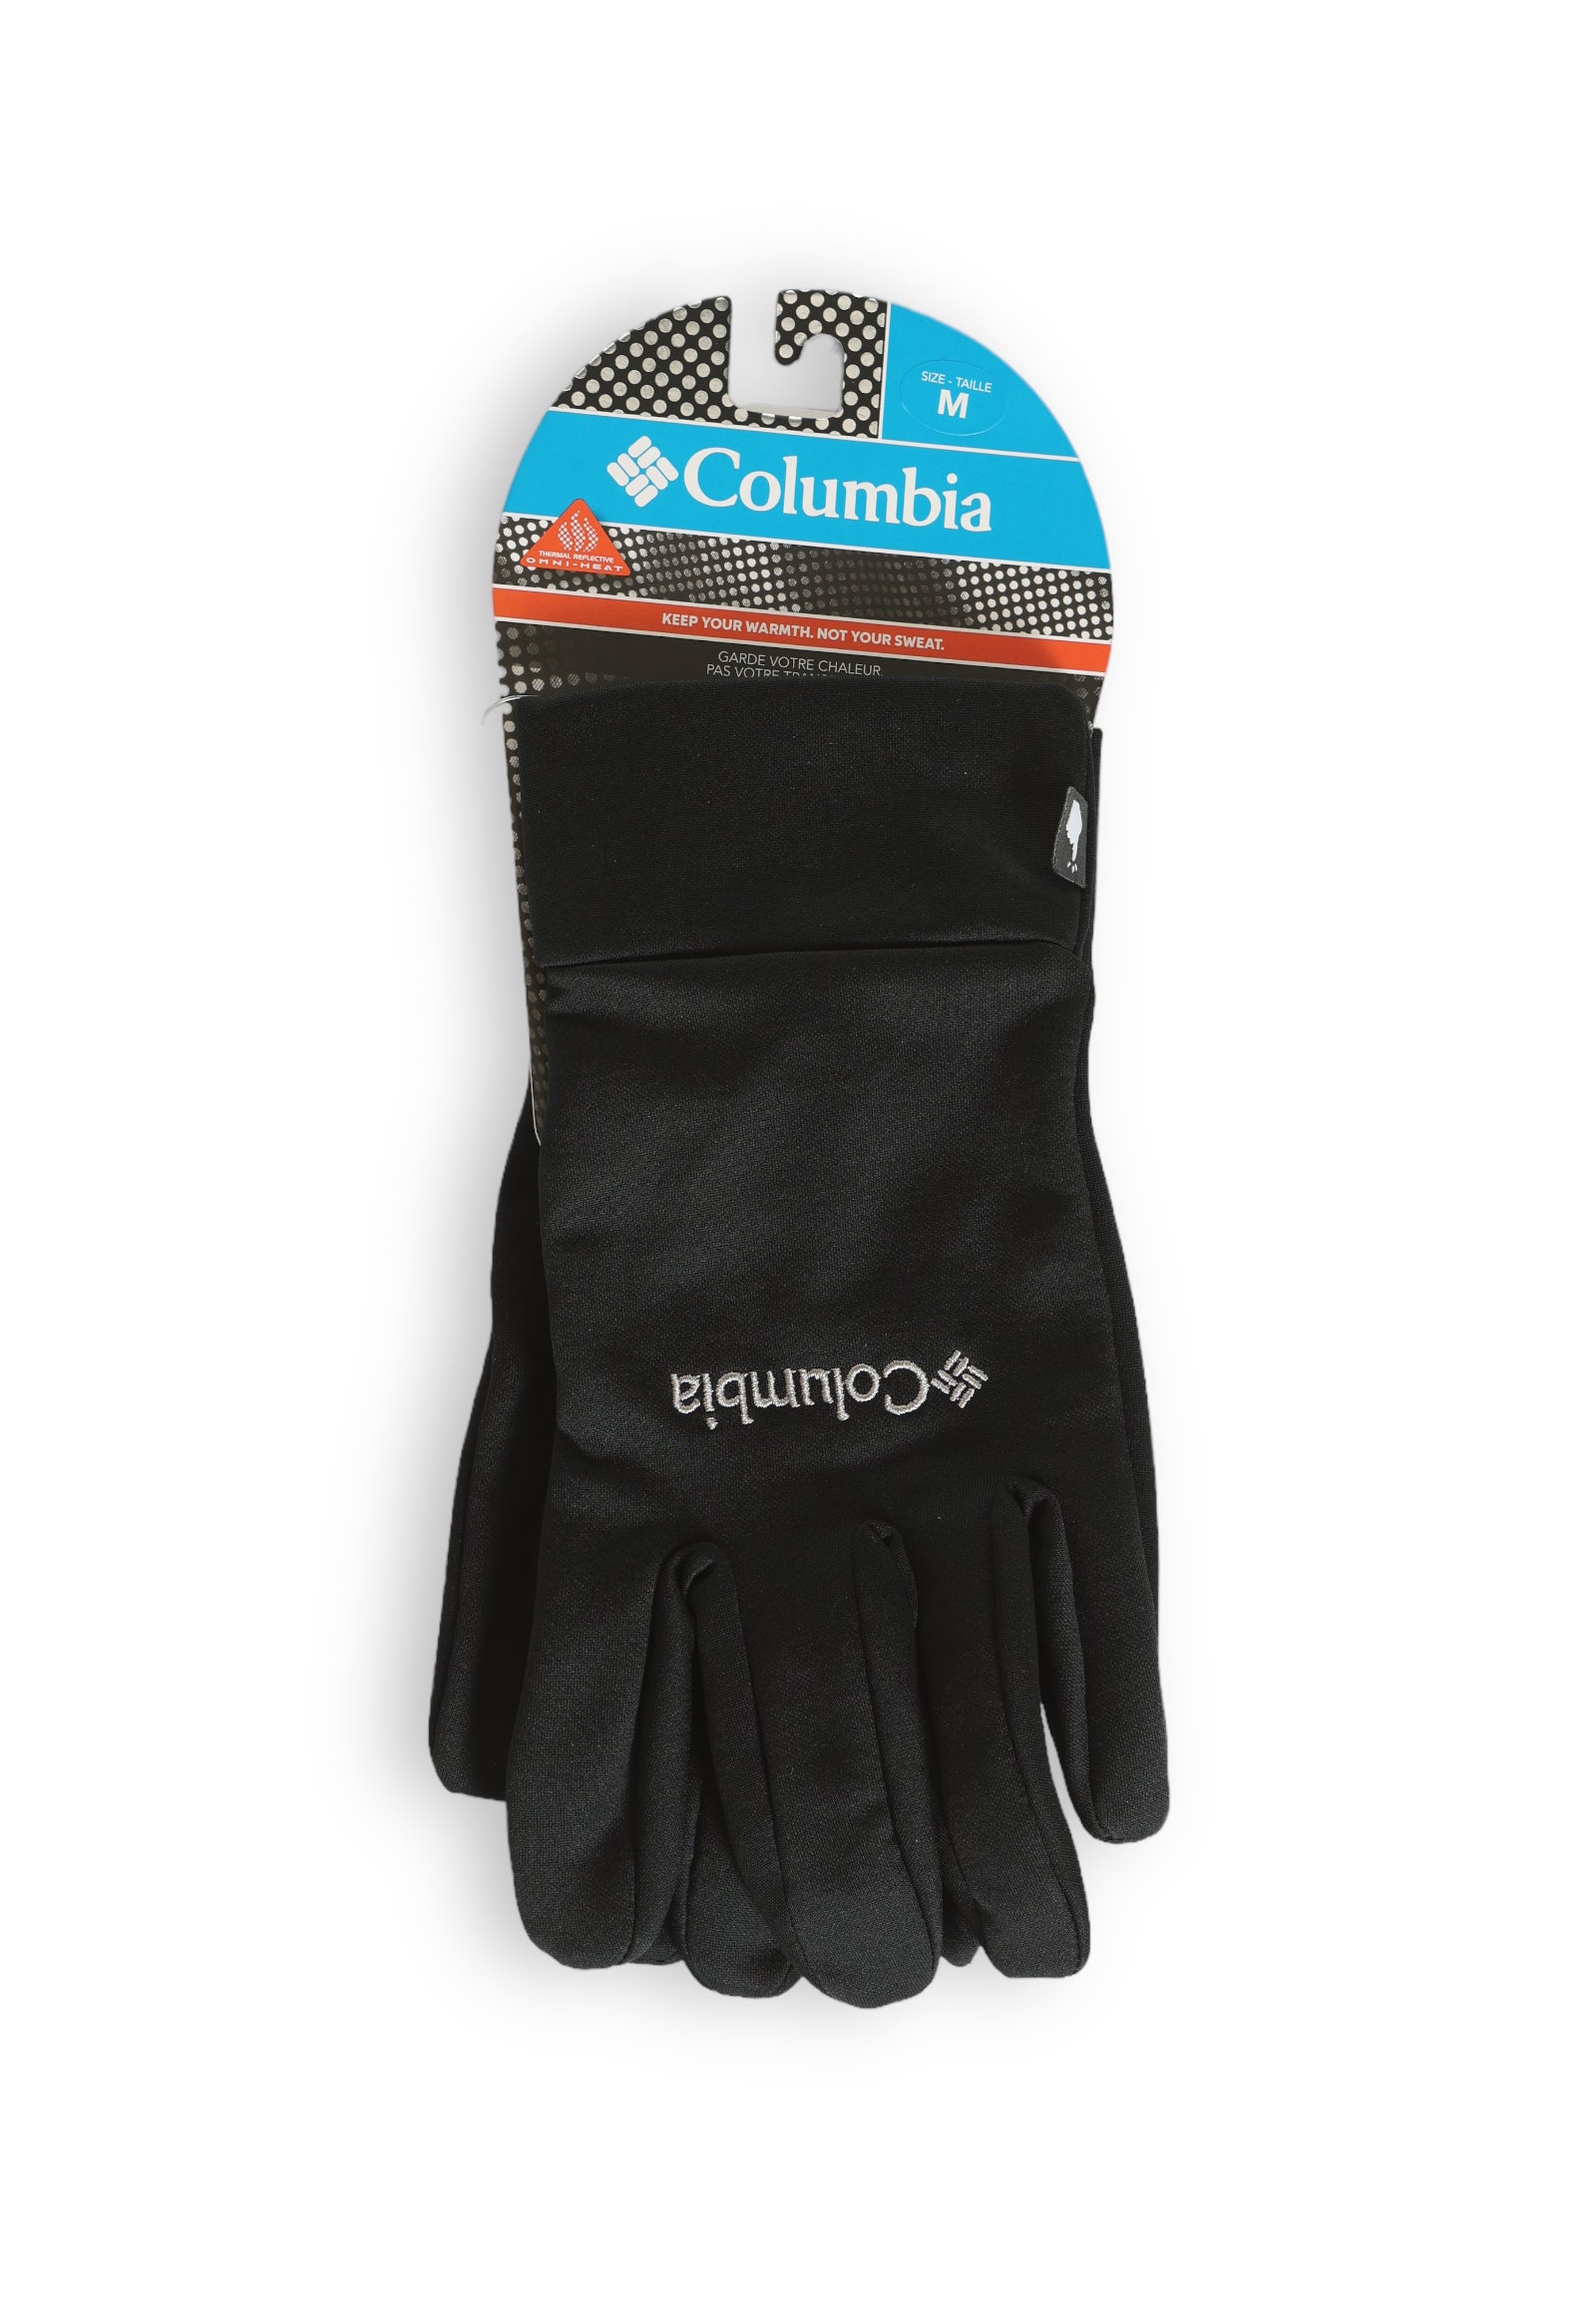 Columbia Gloves 1827791010 Heat Touch Ii LiN-Black